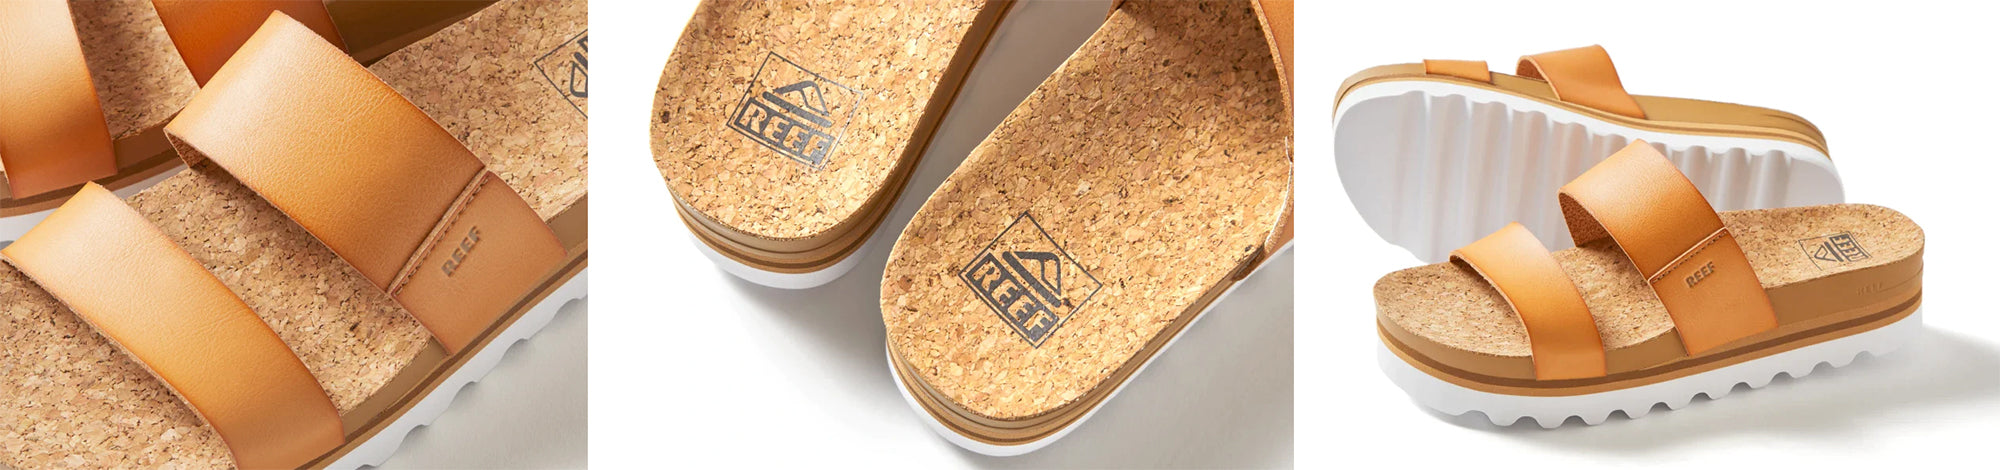 reef women's cushion vist hi sandals detail product shots